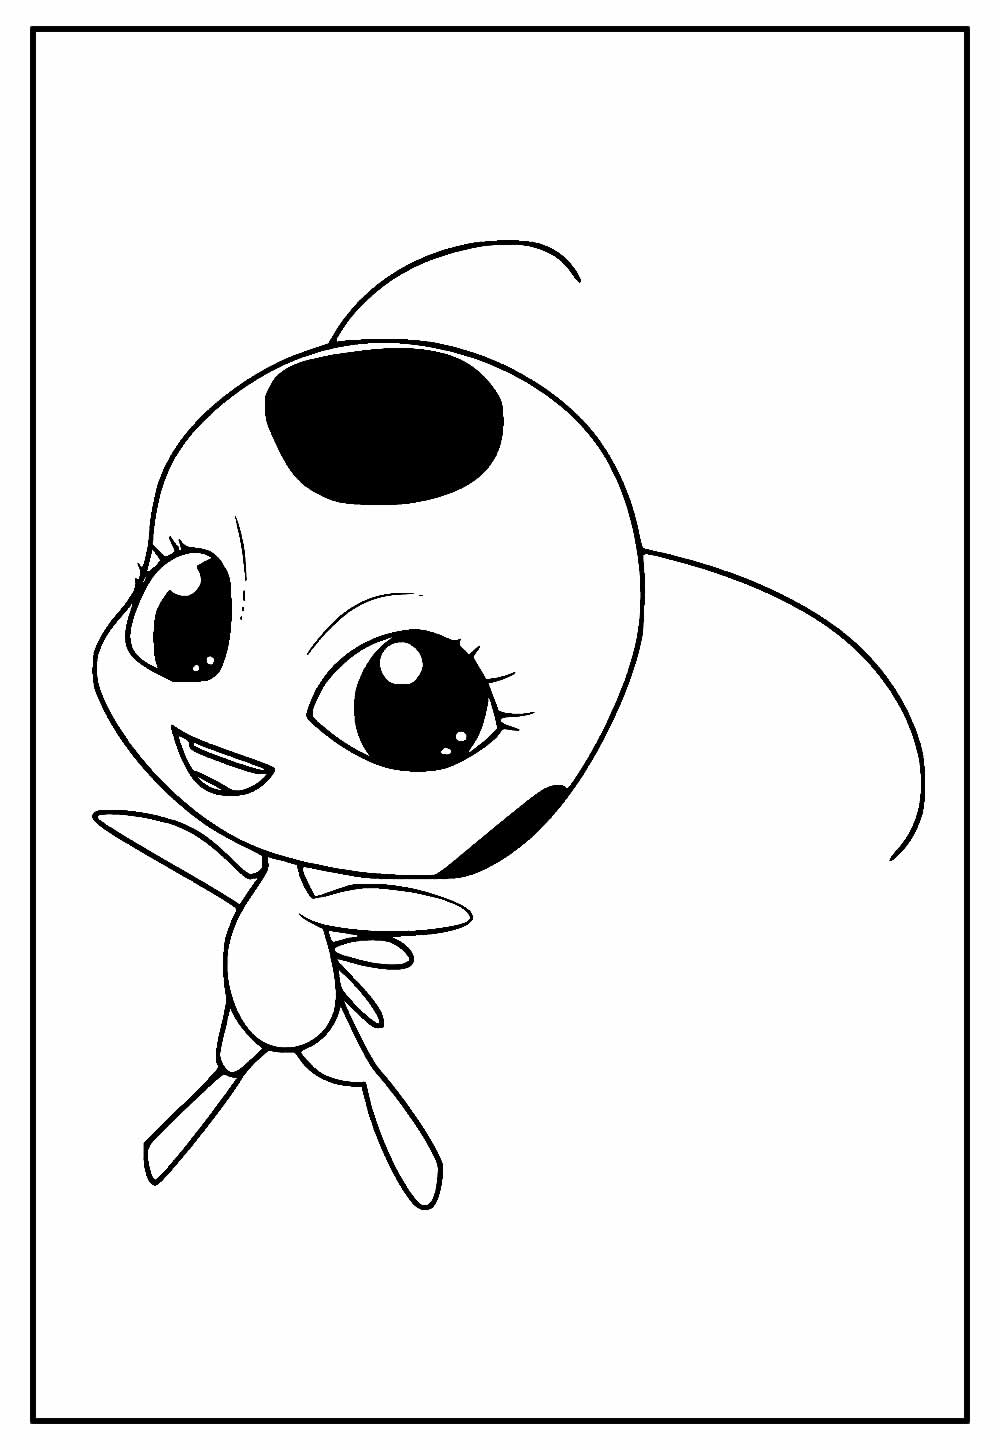 Desenhos para Colorir da Ladybug  Ladybug coloring page, Ladybug cartoon,  Free coloring pages